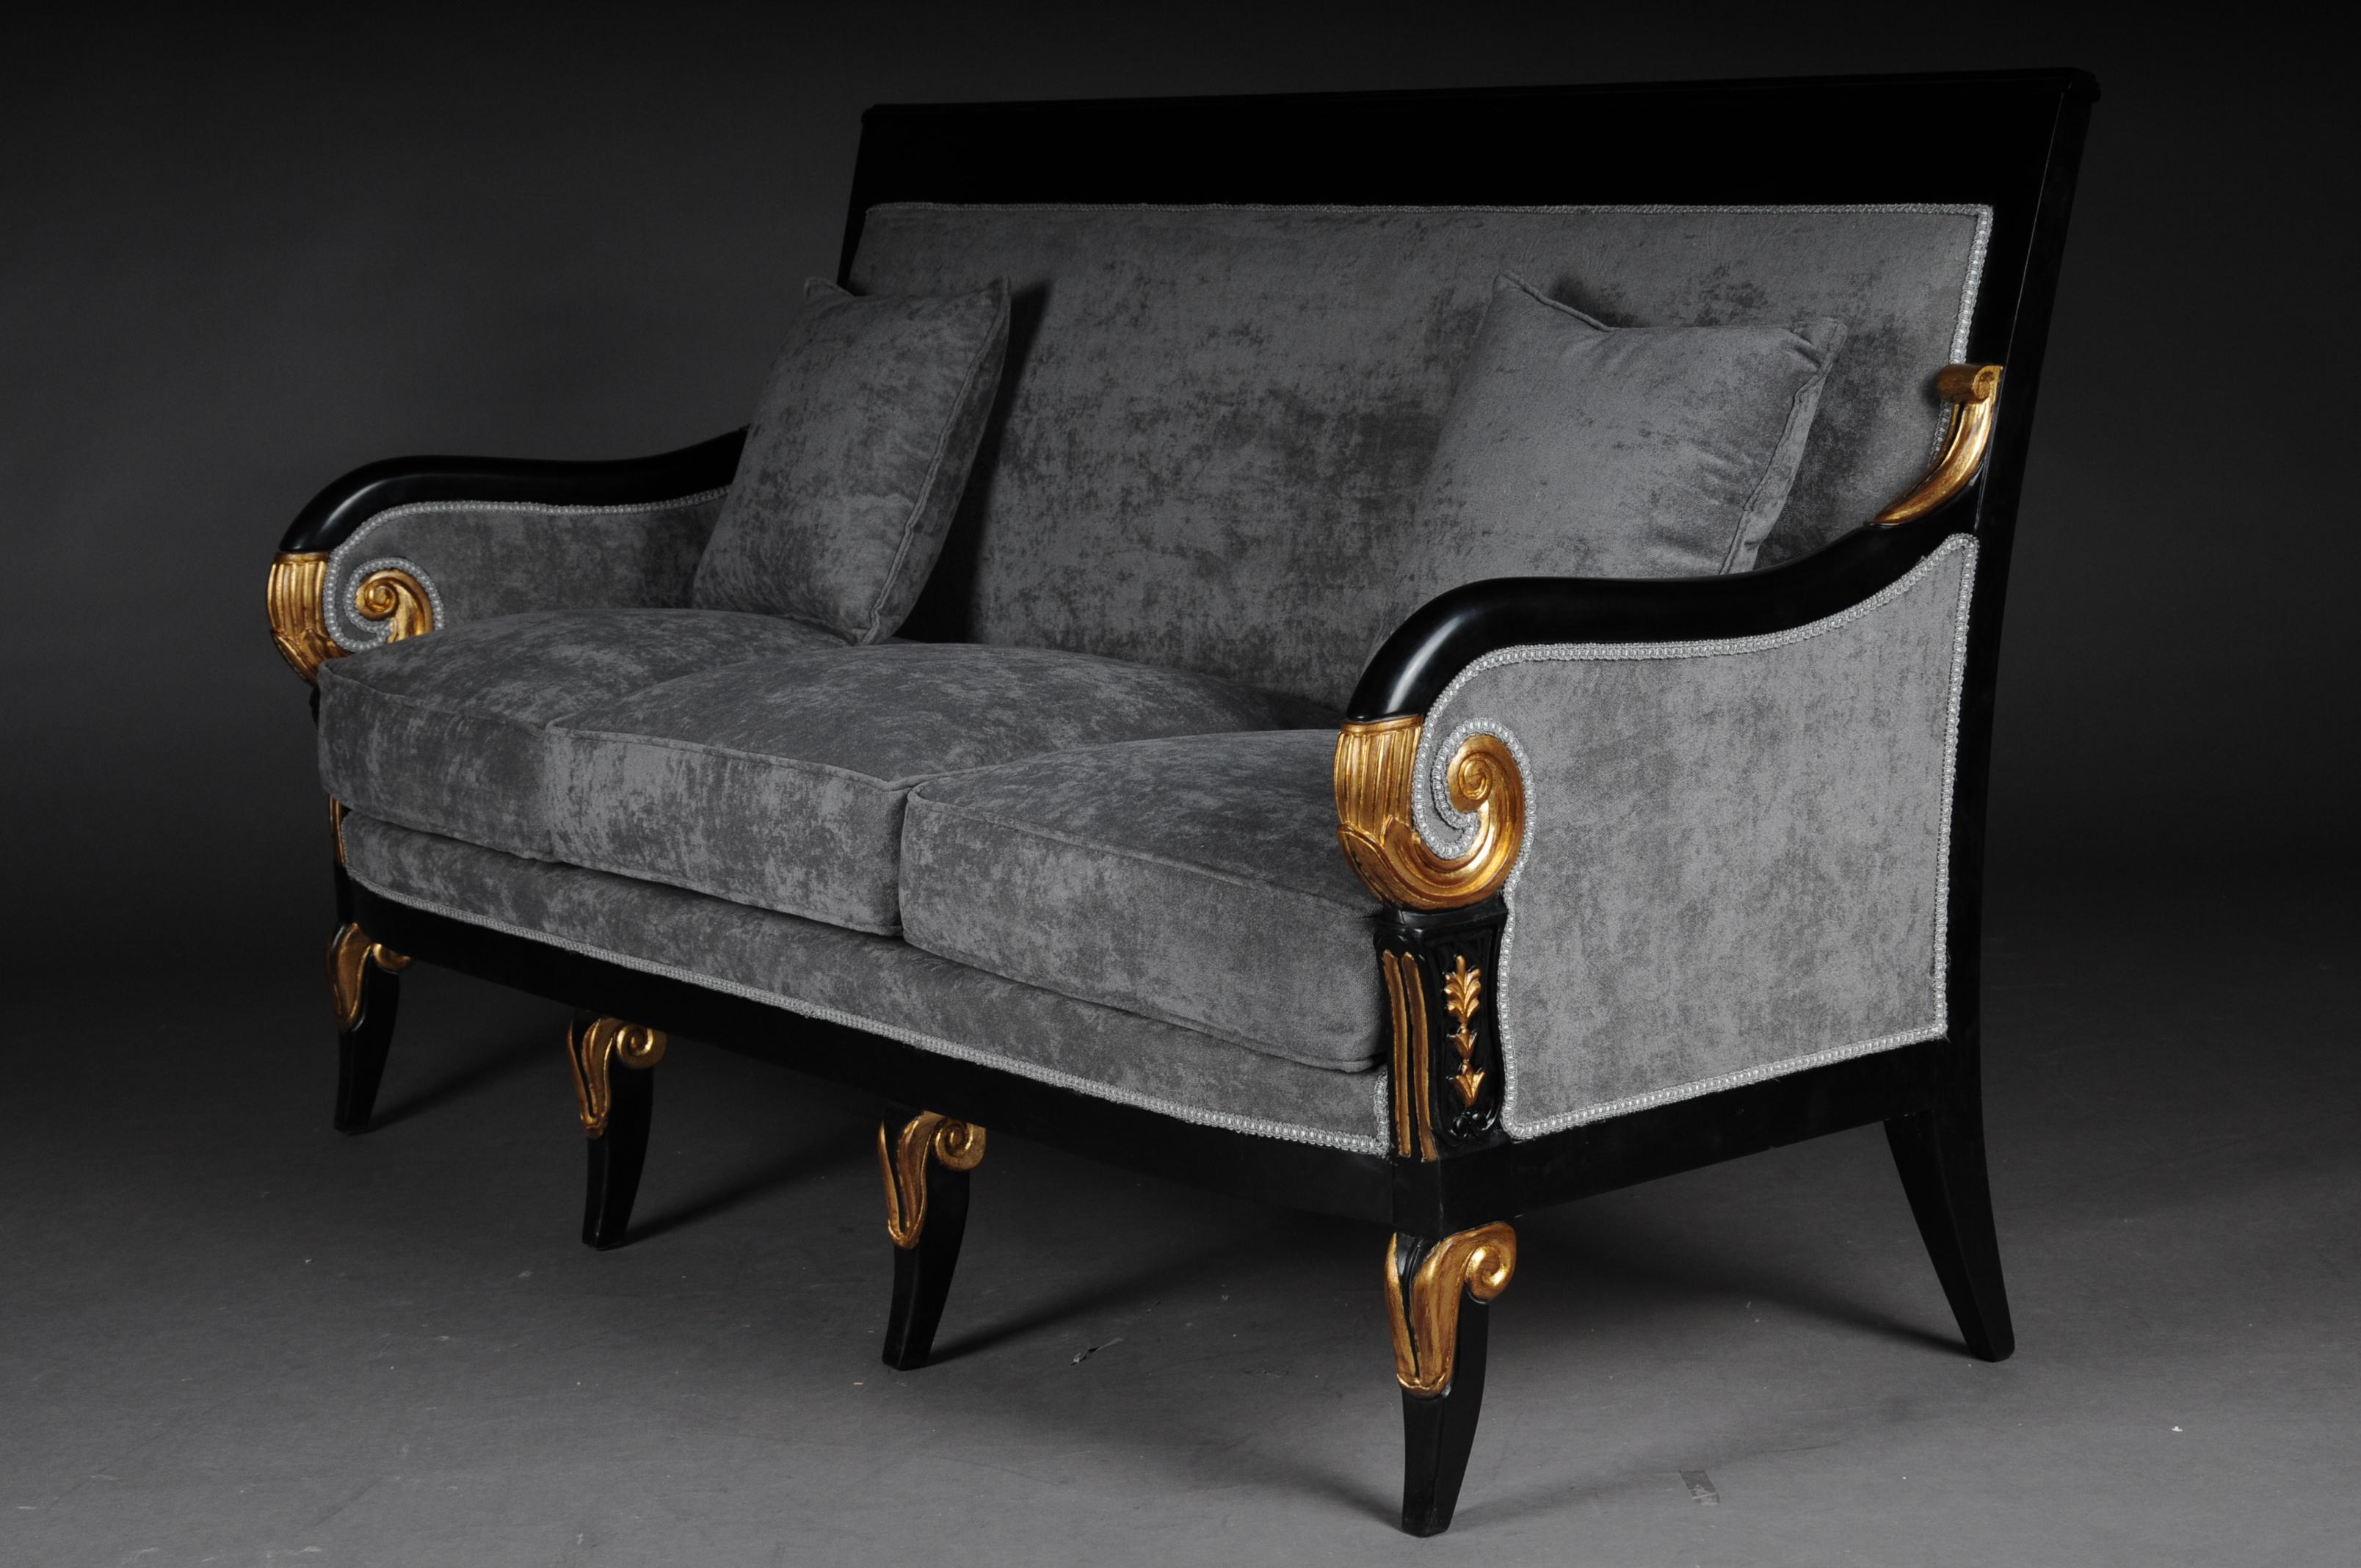 20th Century French Empire Salon Sofa/Couch, Black For Sale 4